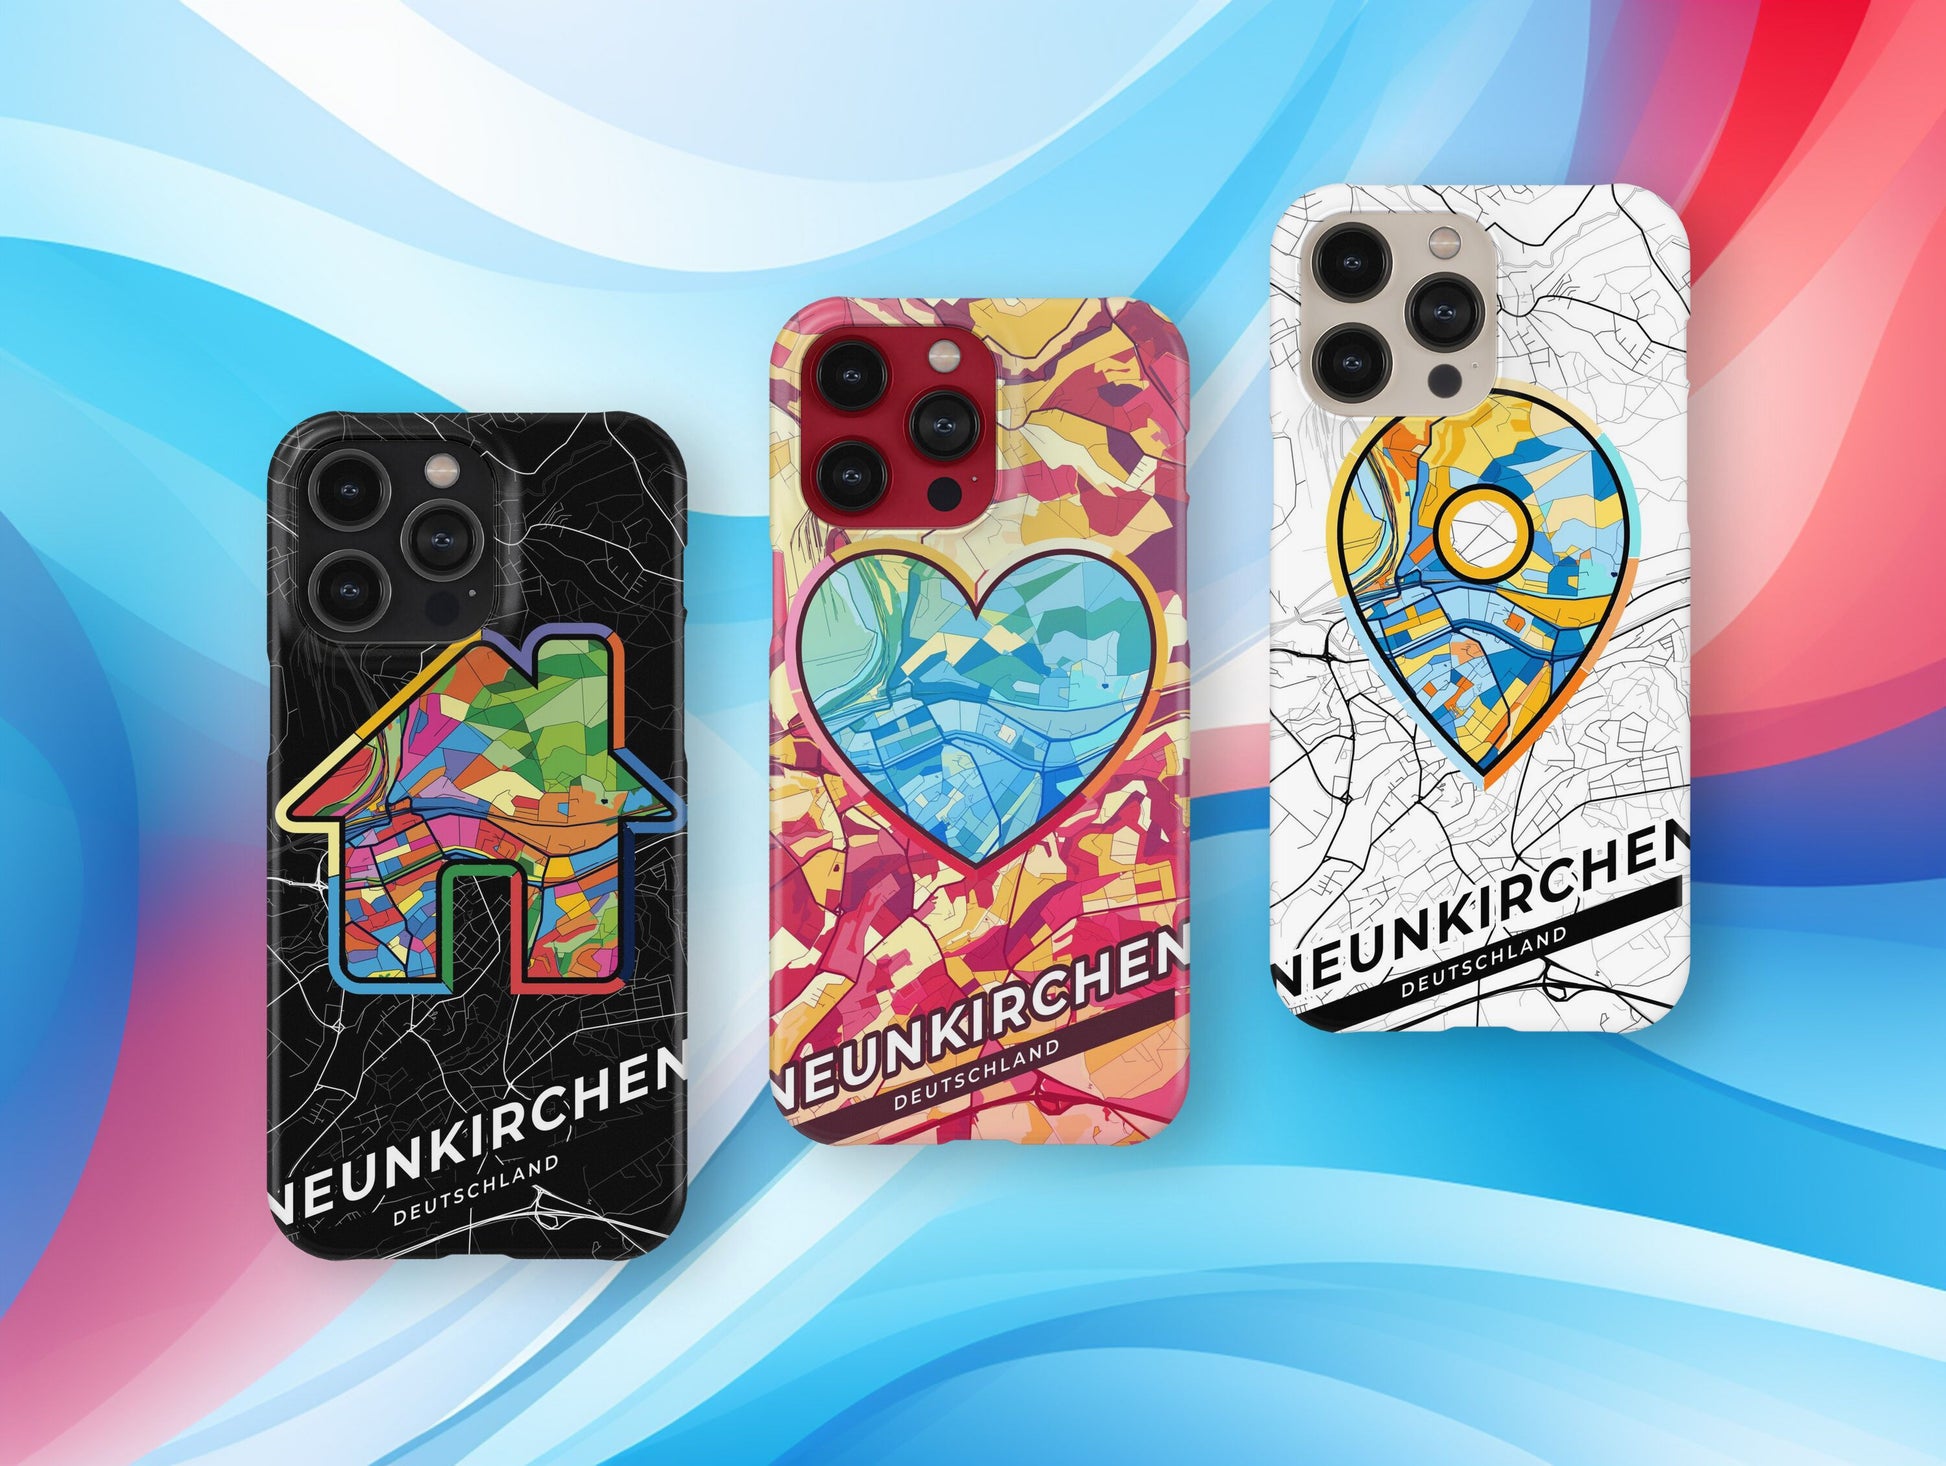 Neunkirchen Deutschland slim phone case with colorful icon. Birthday, wedding or housewarming gift. Couple match cases.